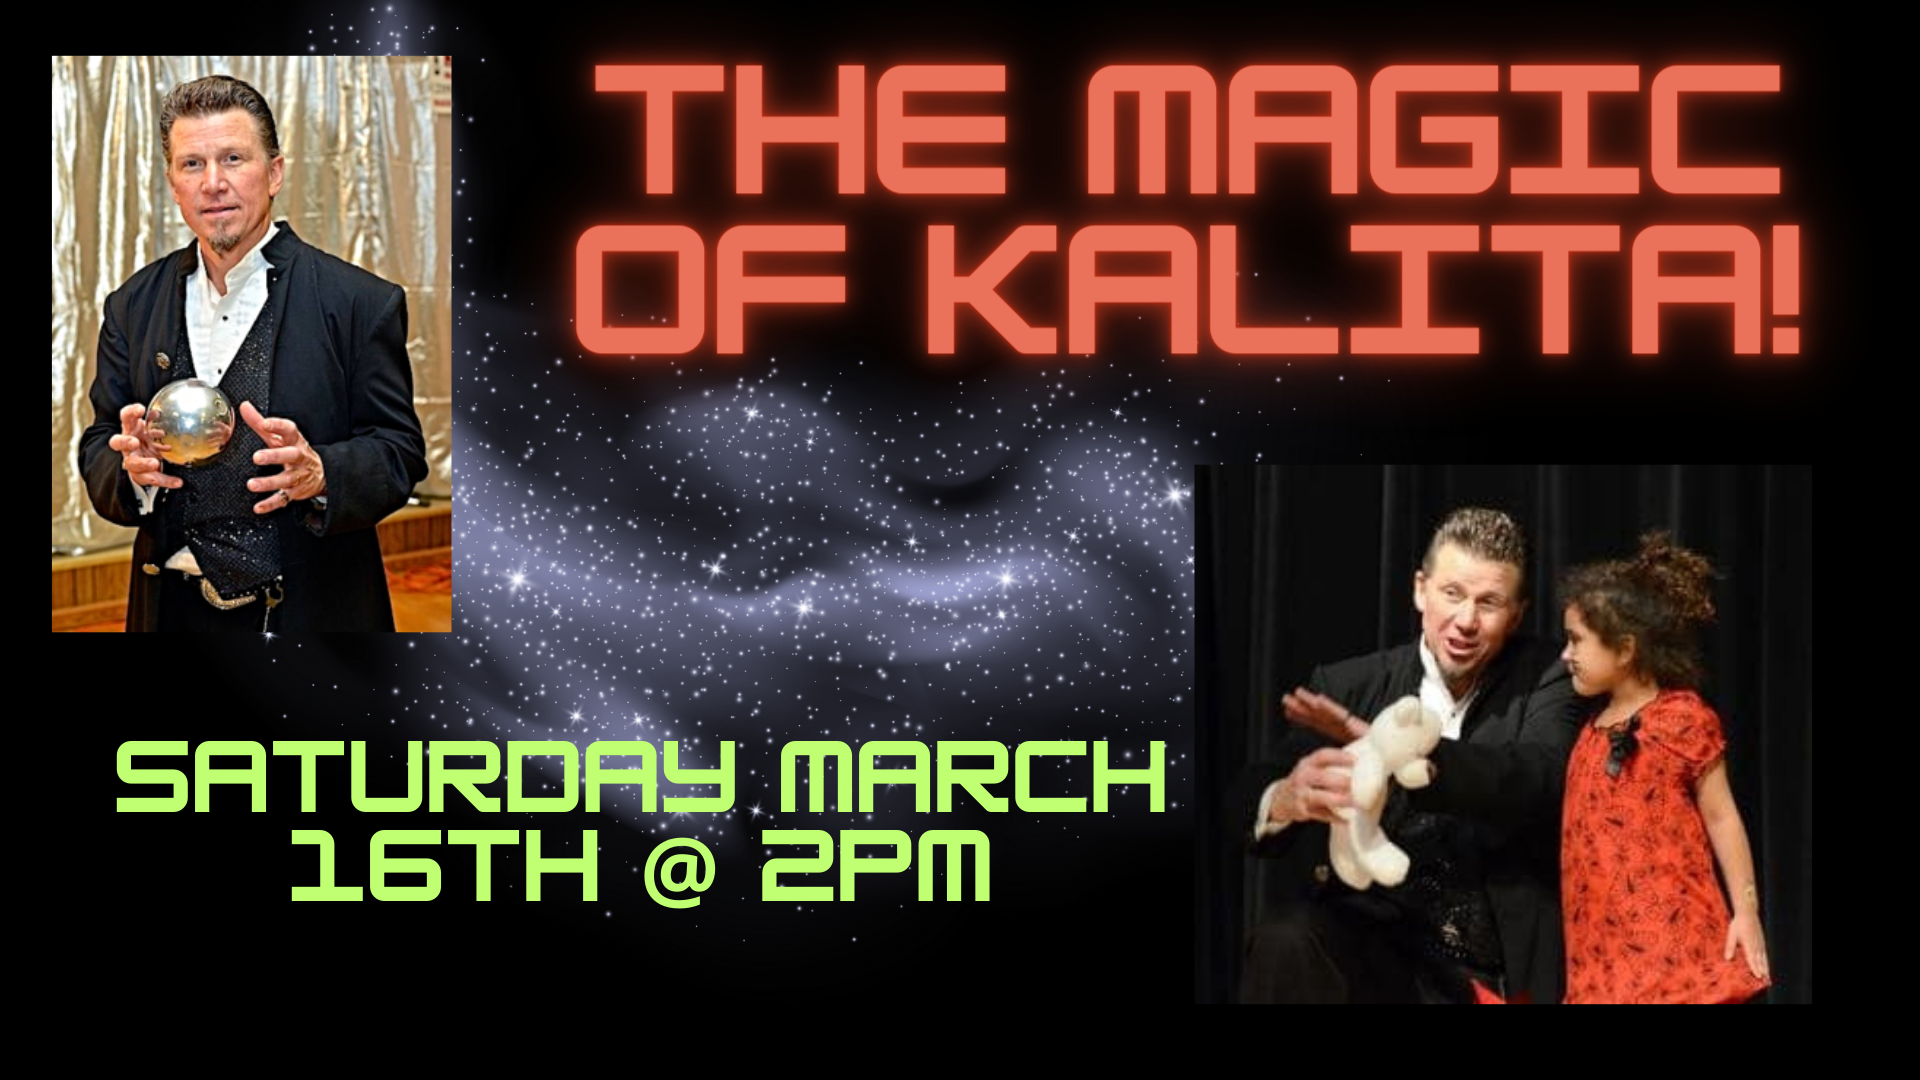 The Magic of Kalita, Saturday, March 16 at 2:00 pm